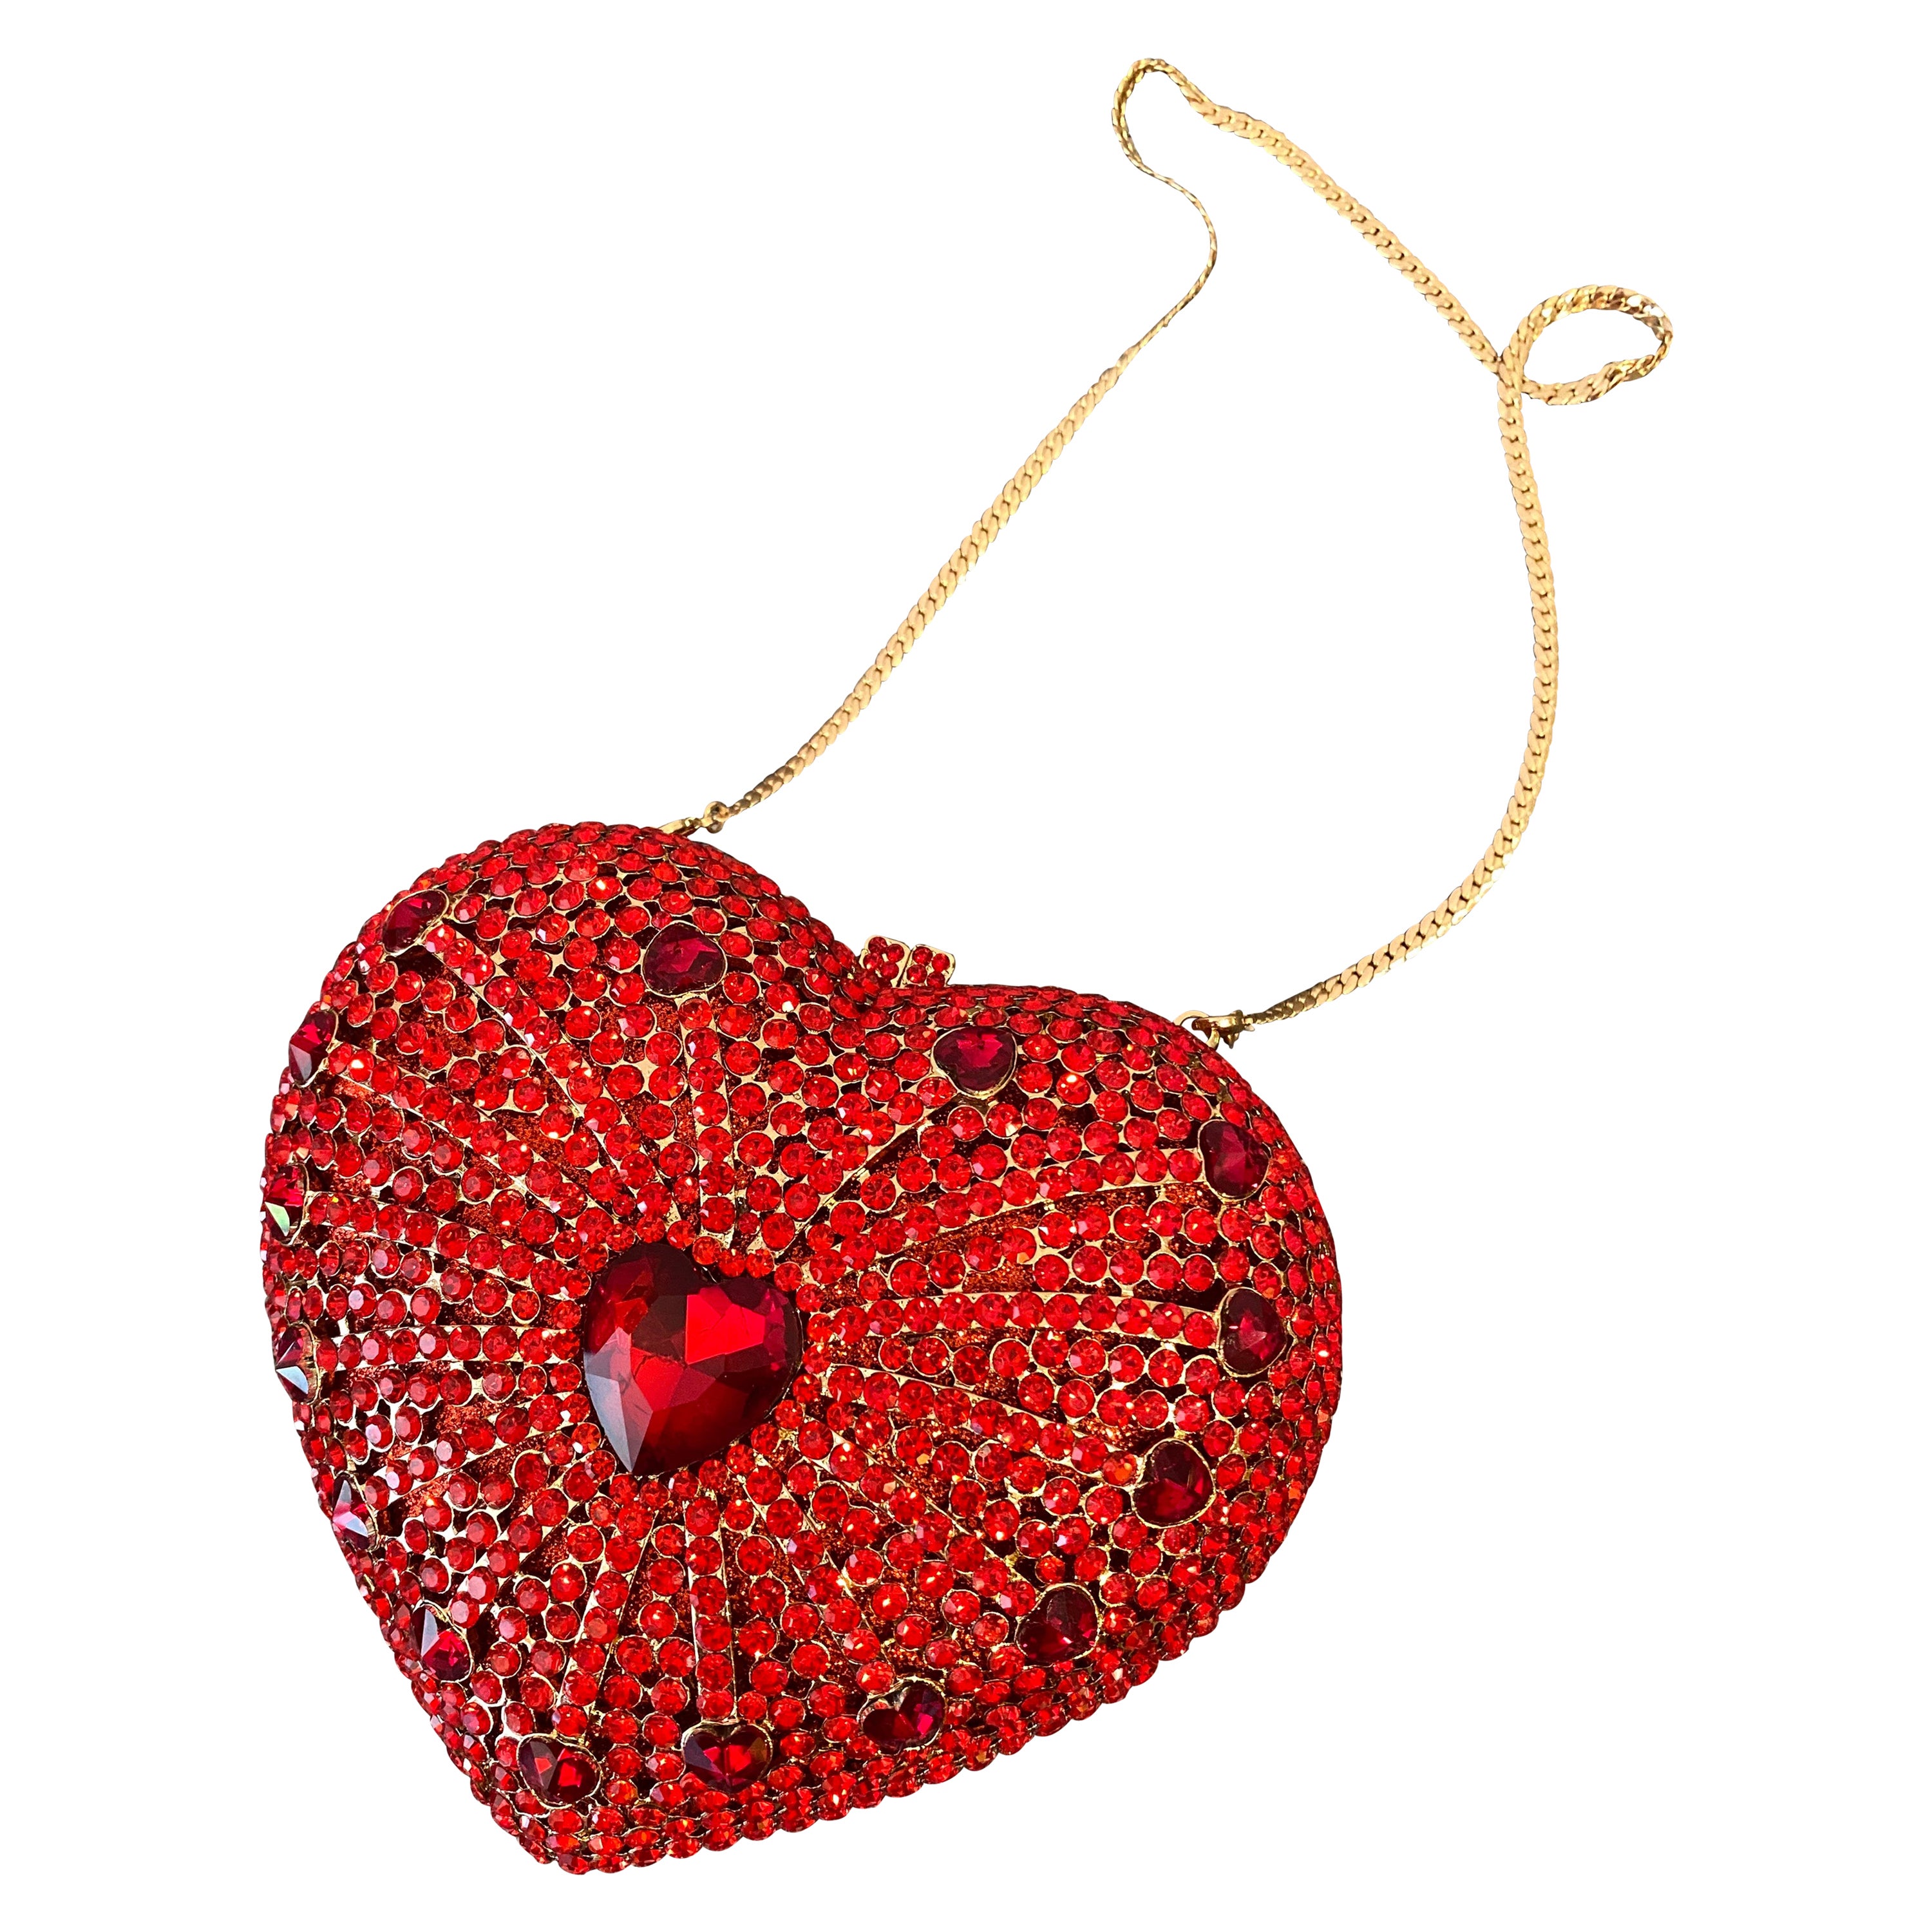 Judith Leiber Style Jeweled Heart Purse